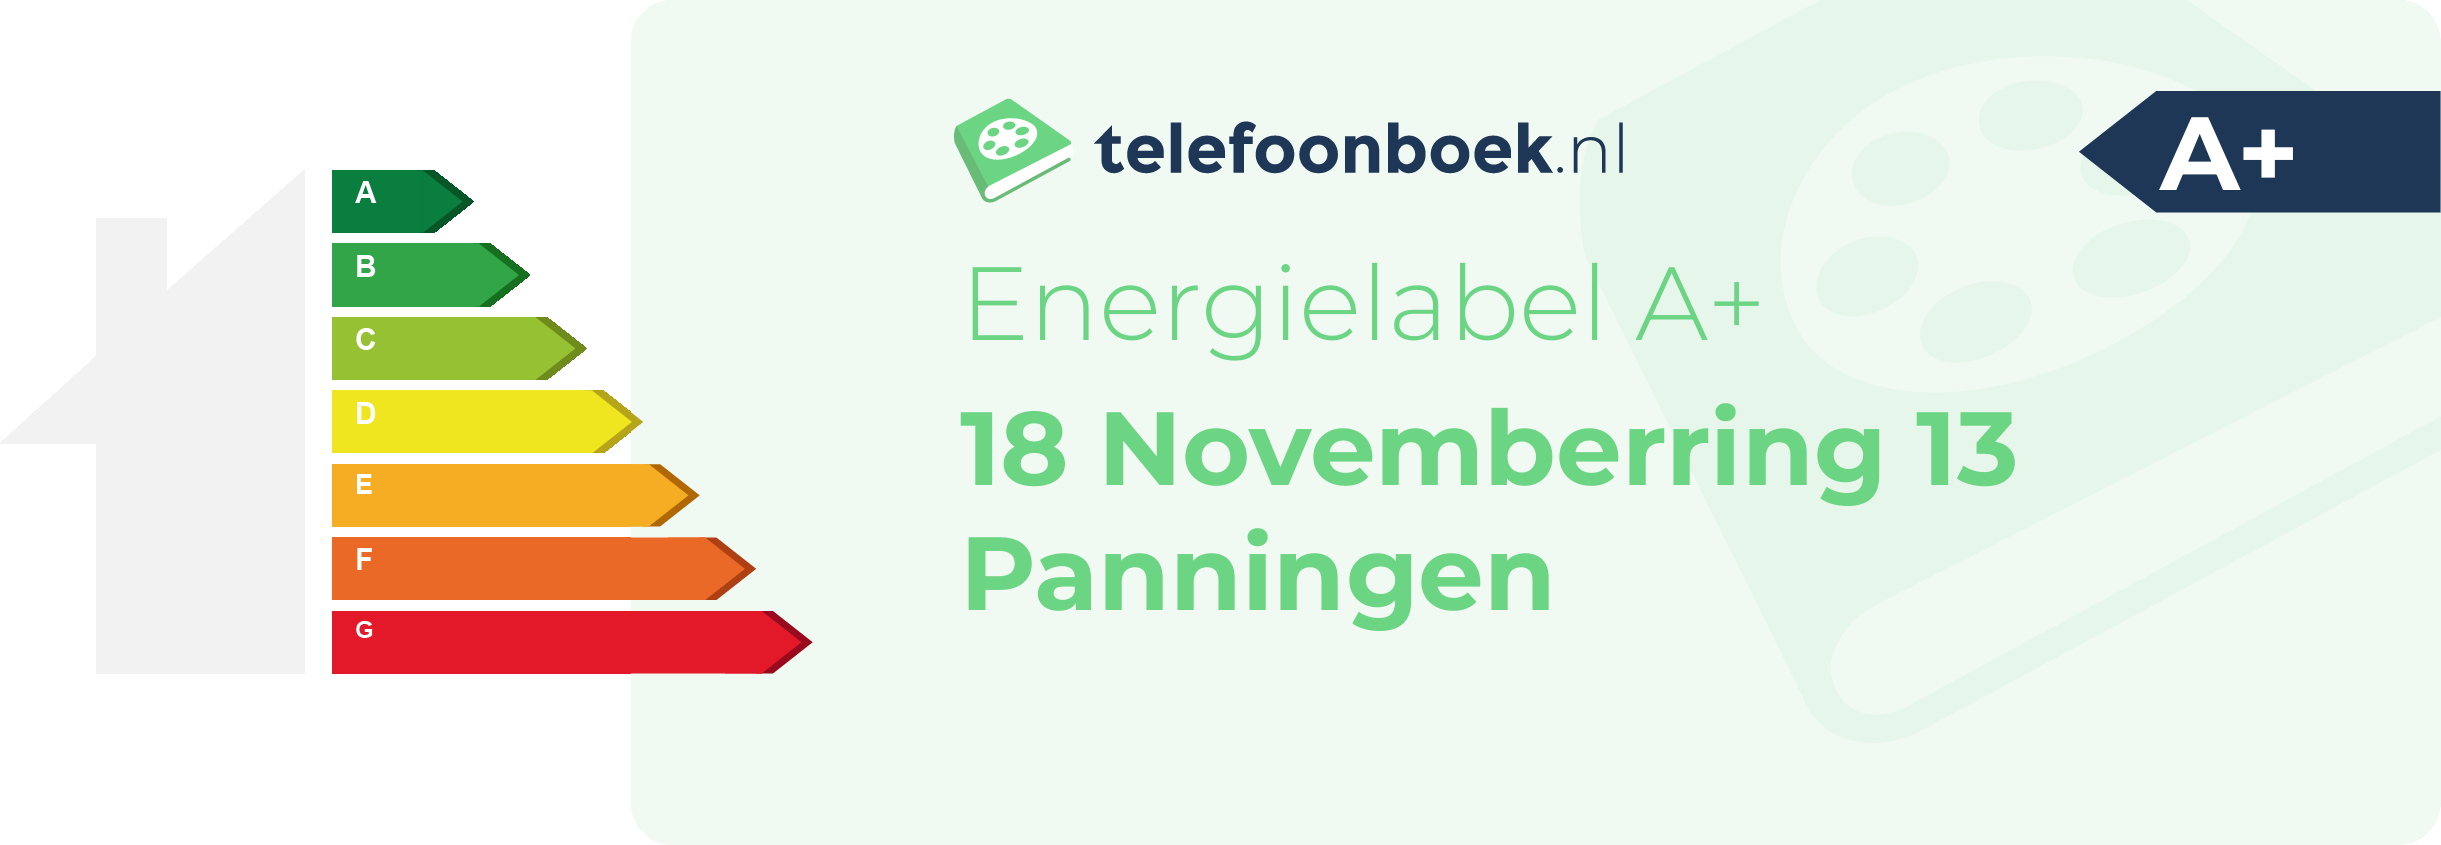 Energielabel 18 Novemberring 13 Panningen